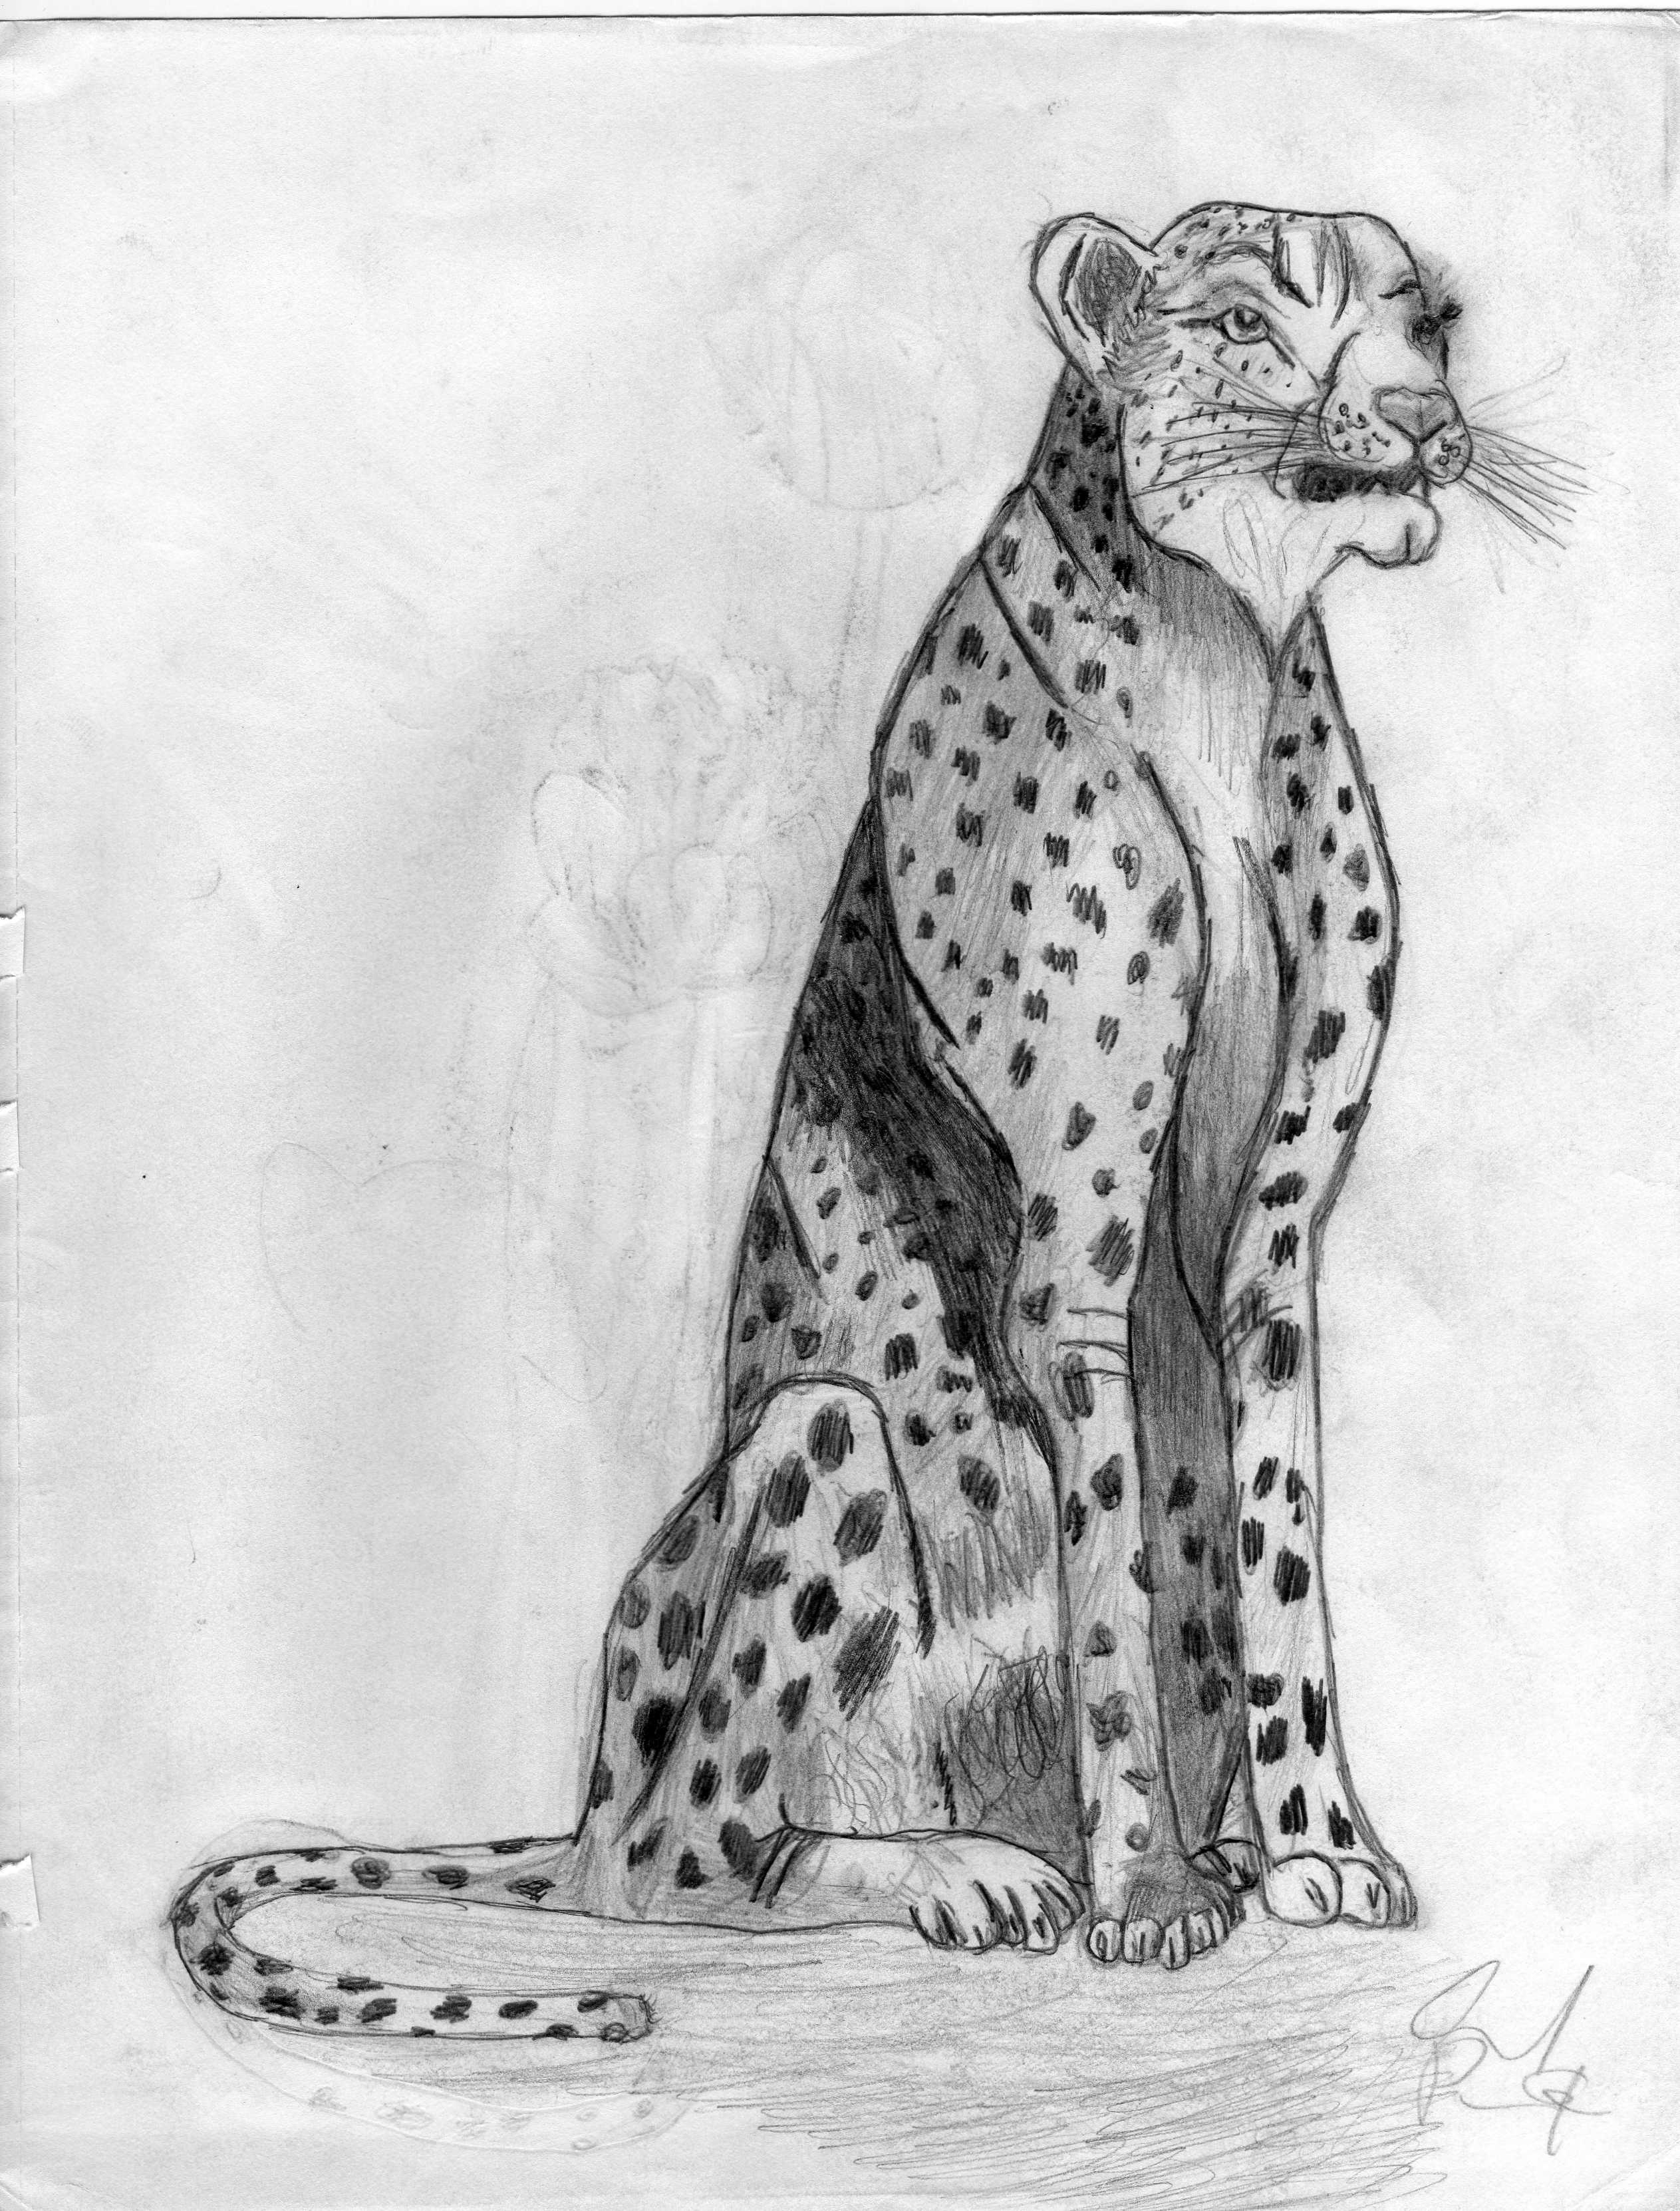 cheeta by eriepilot44